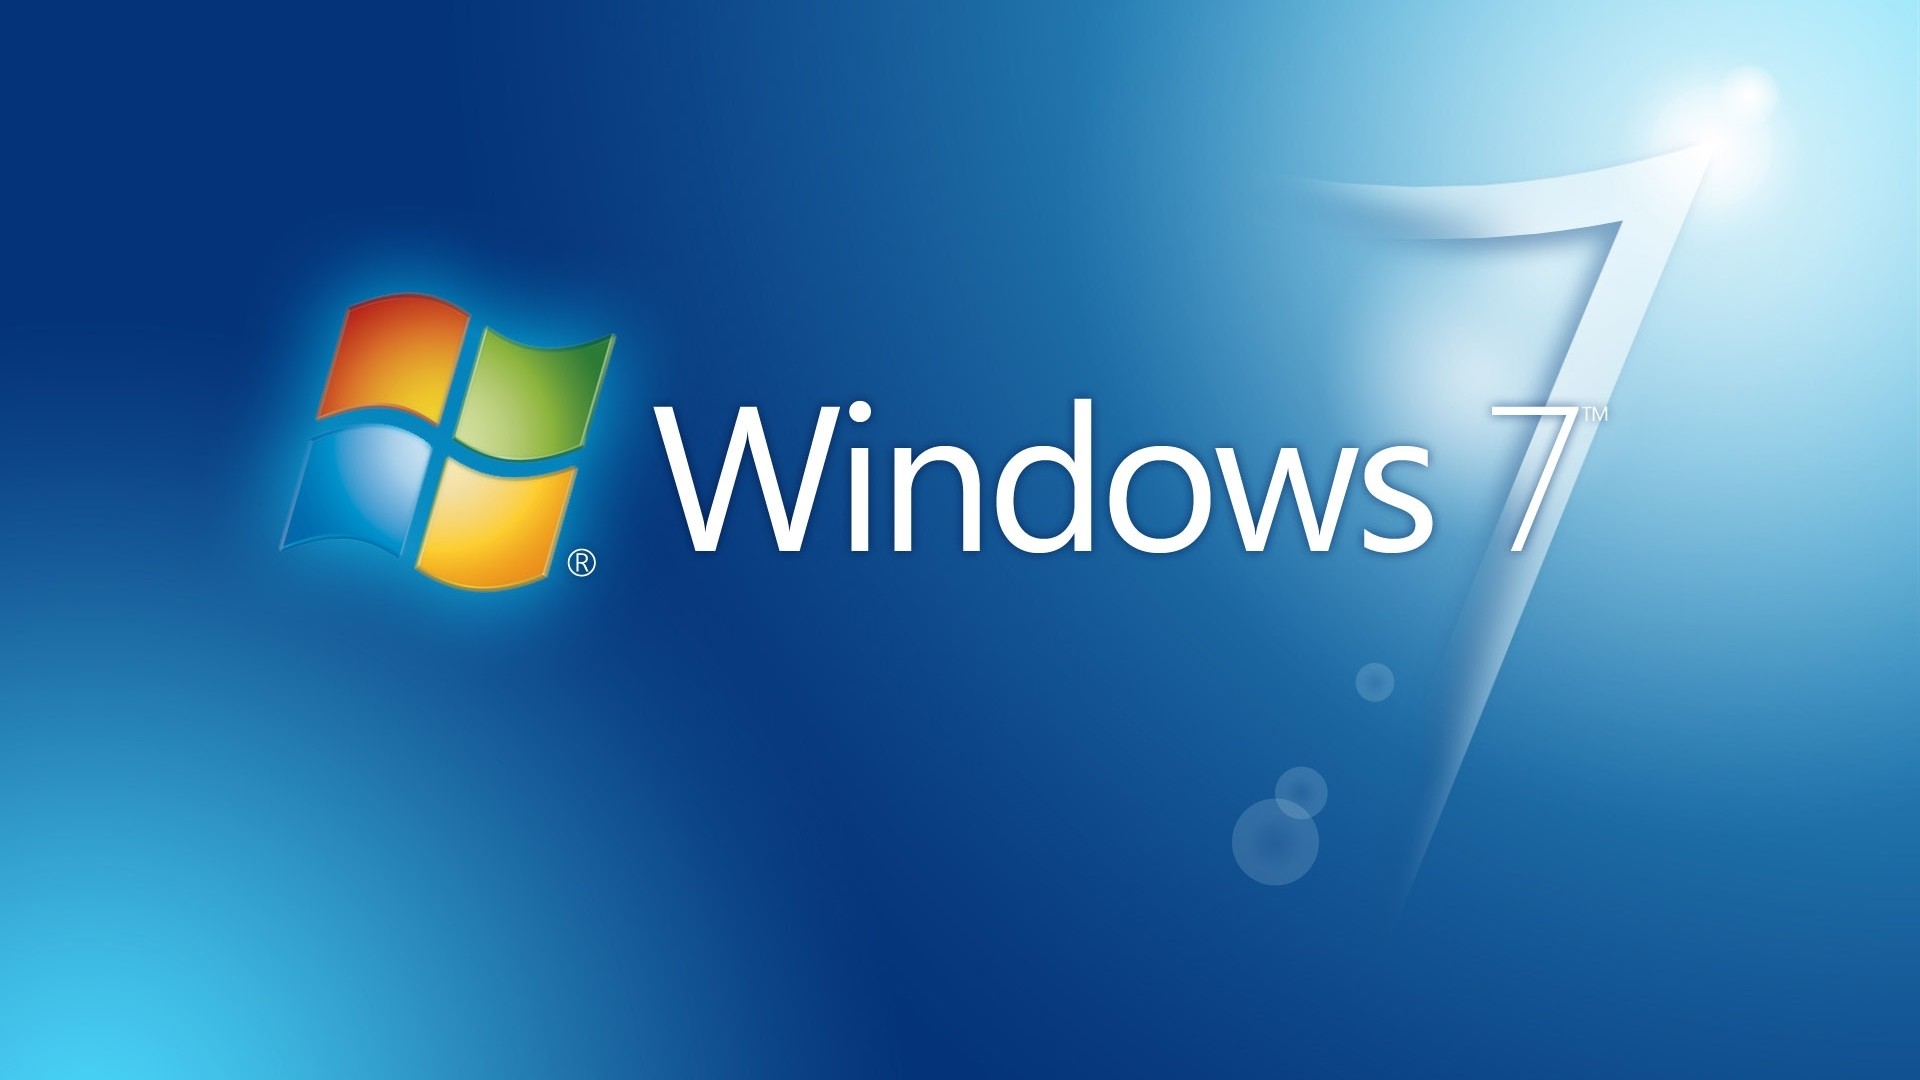 Microsoft Windows Desktop Background Image